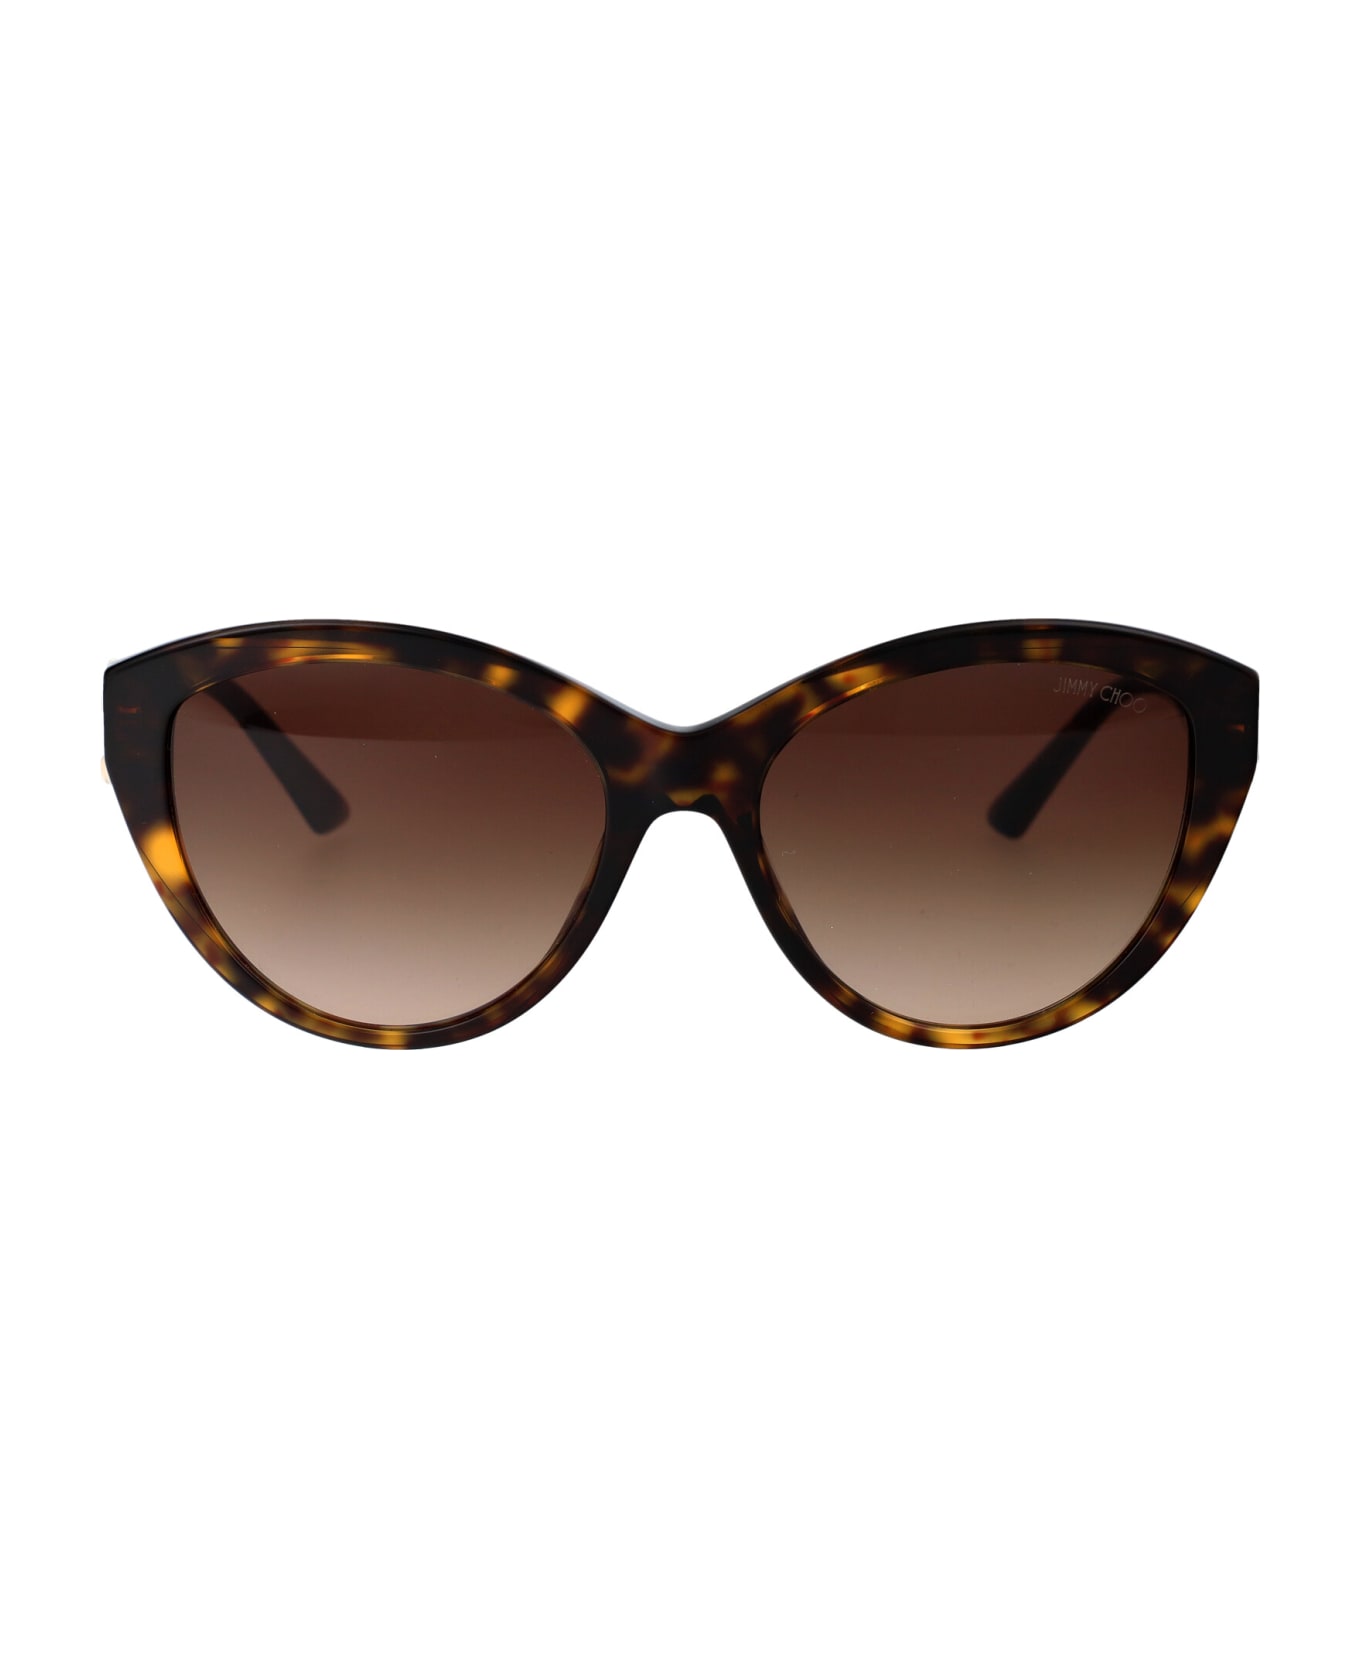 Jimmy Choo Eyewear 0jc5007 Sunglasses - 500213 HAVANA